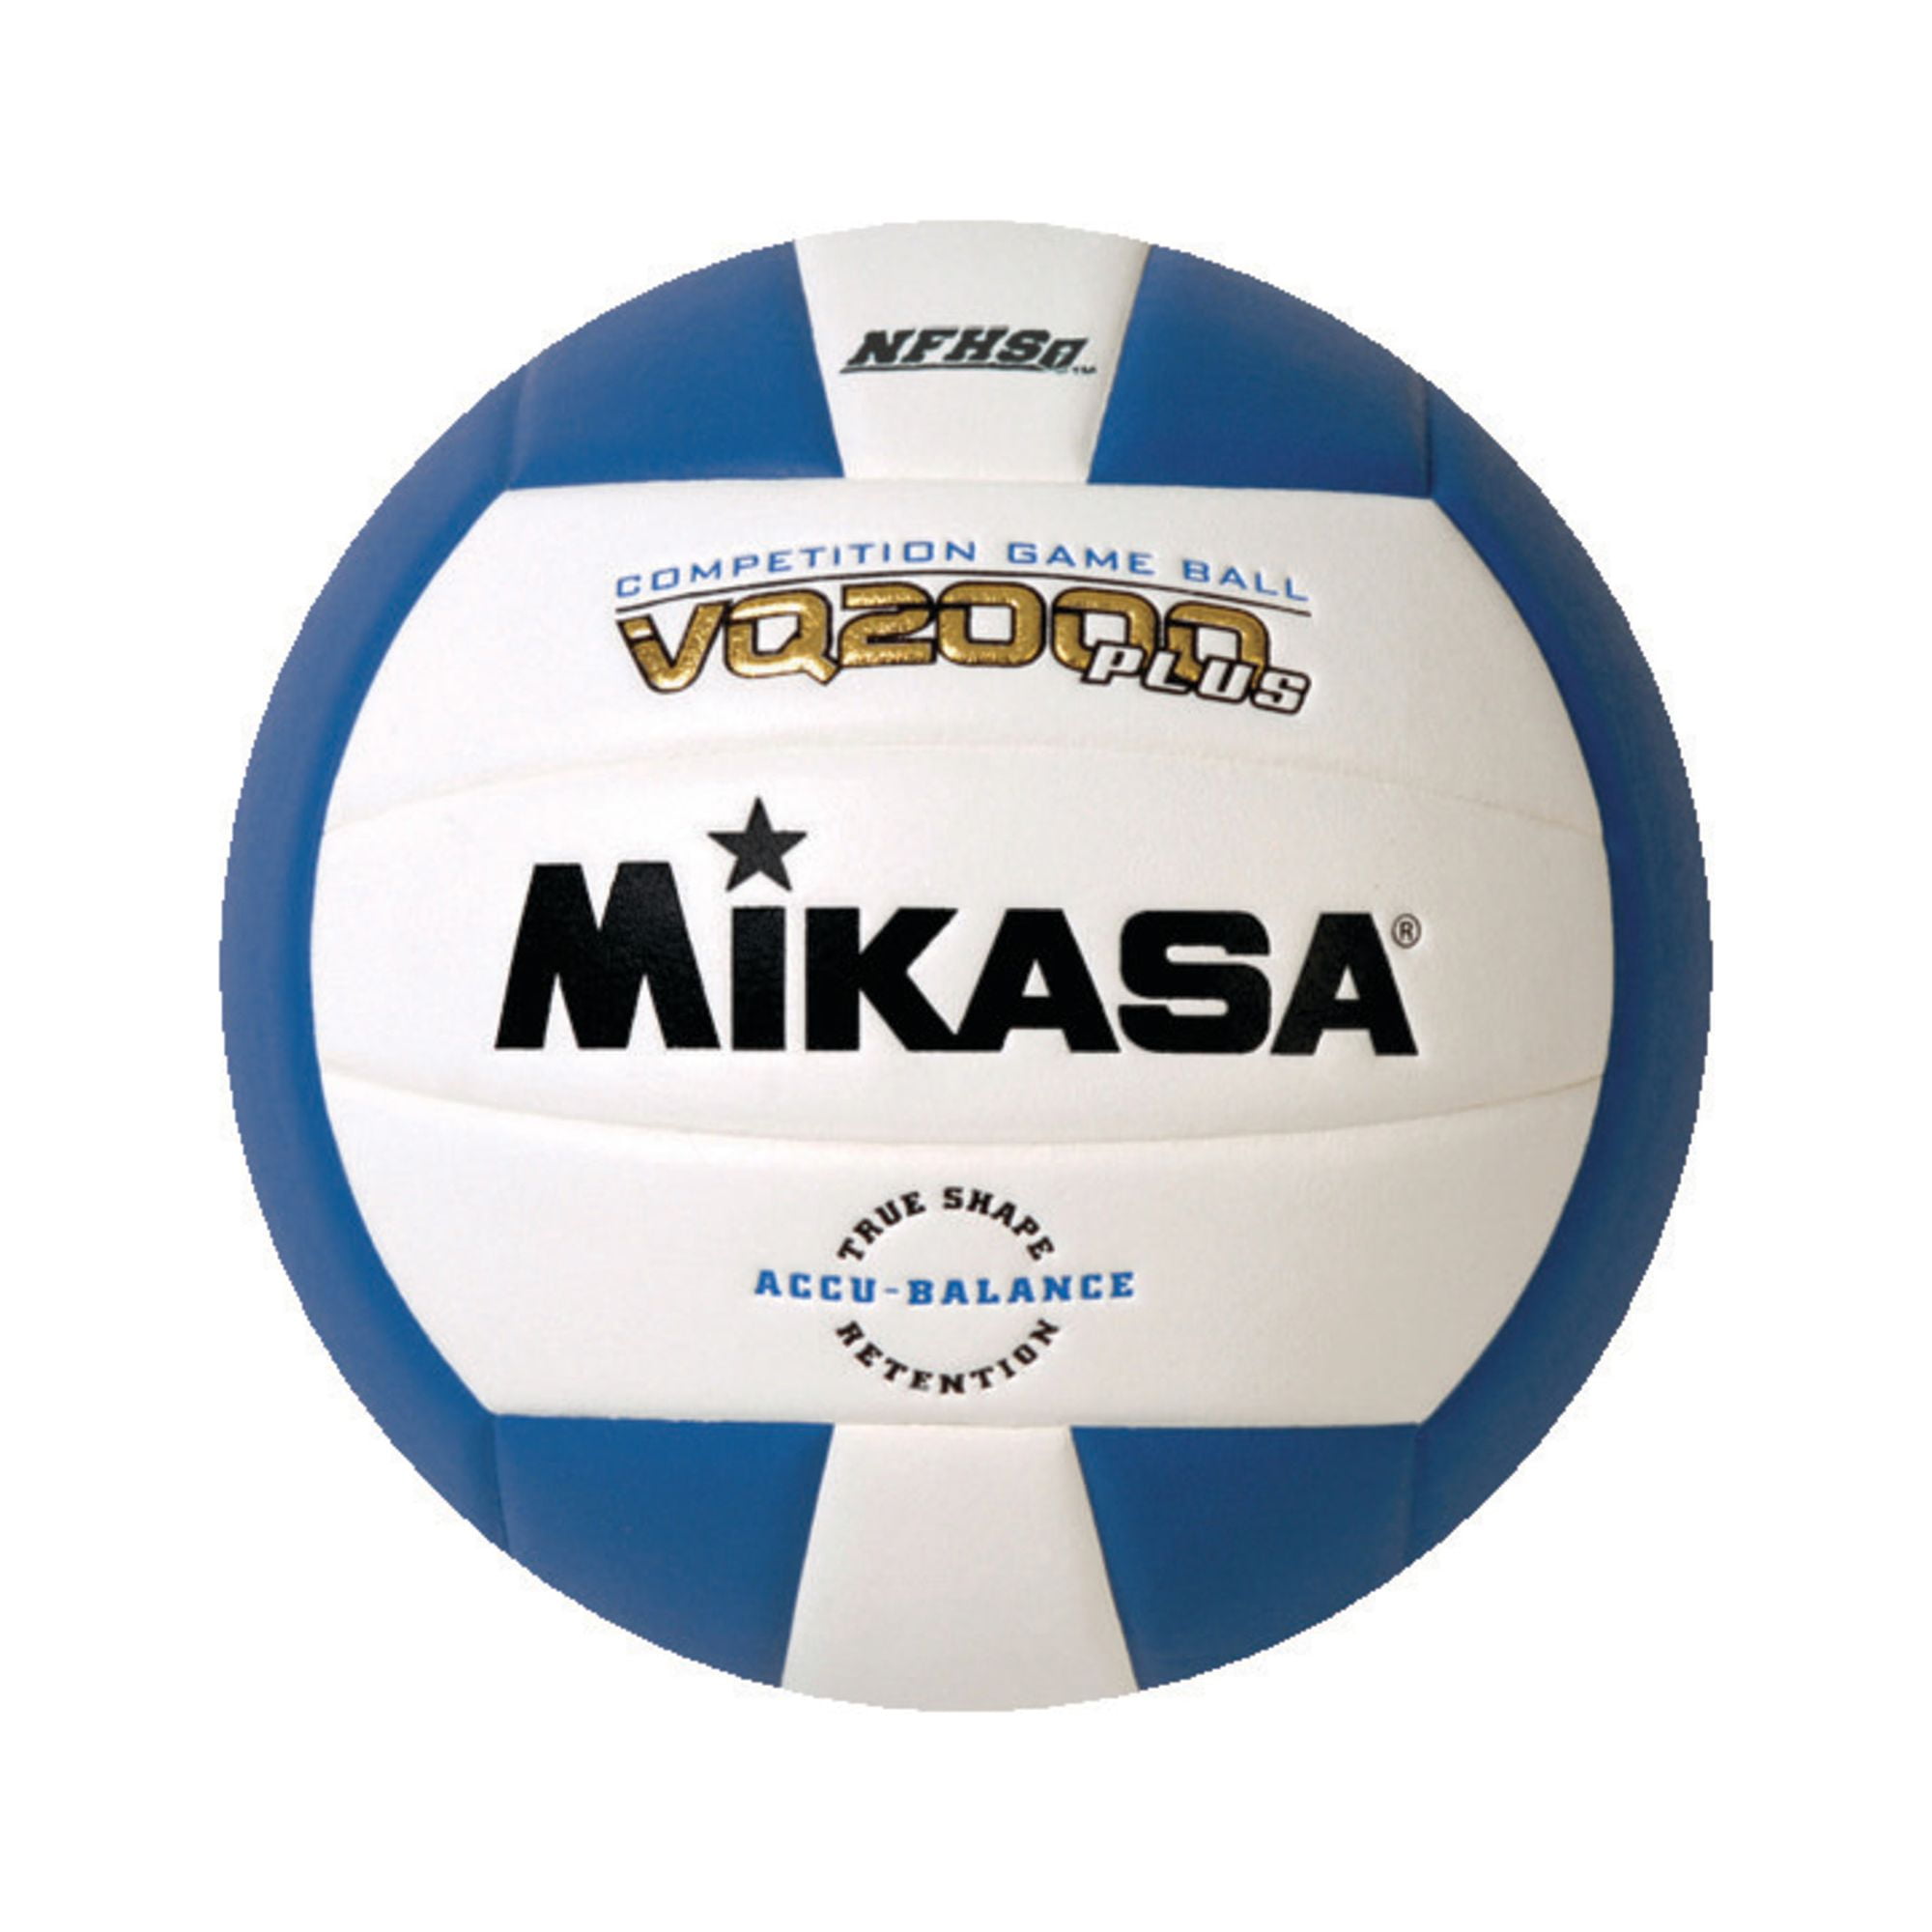 Mikasa VQ2000 Micro-Cell Indoor Volleyball, Royal/White - Walmart.com